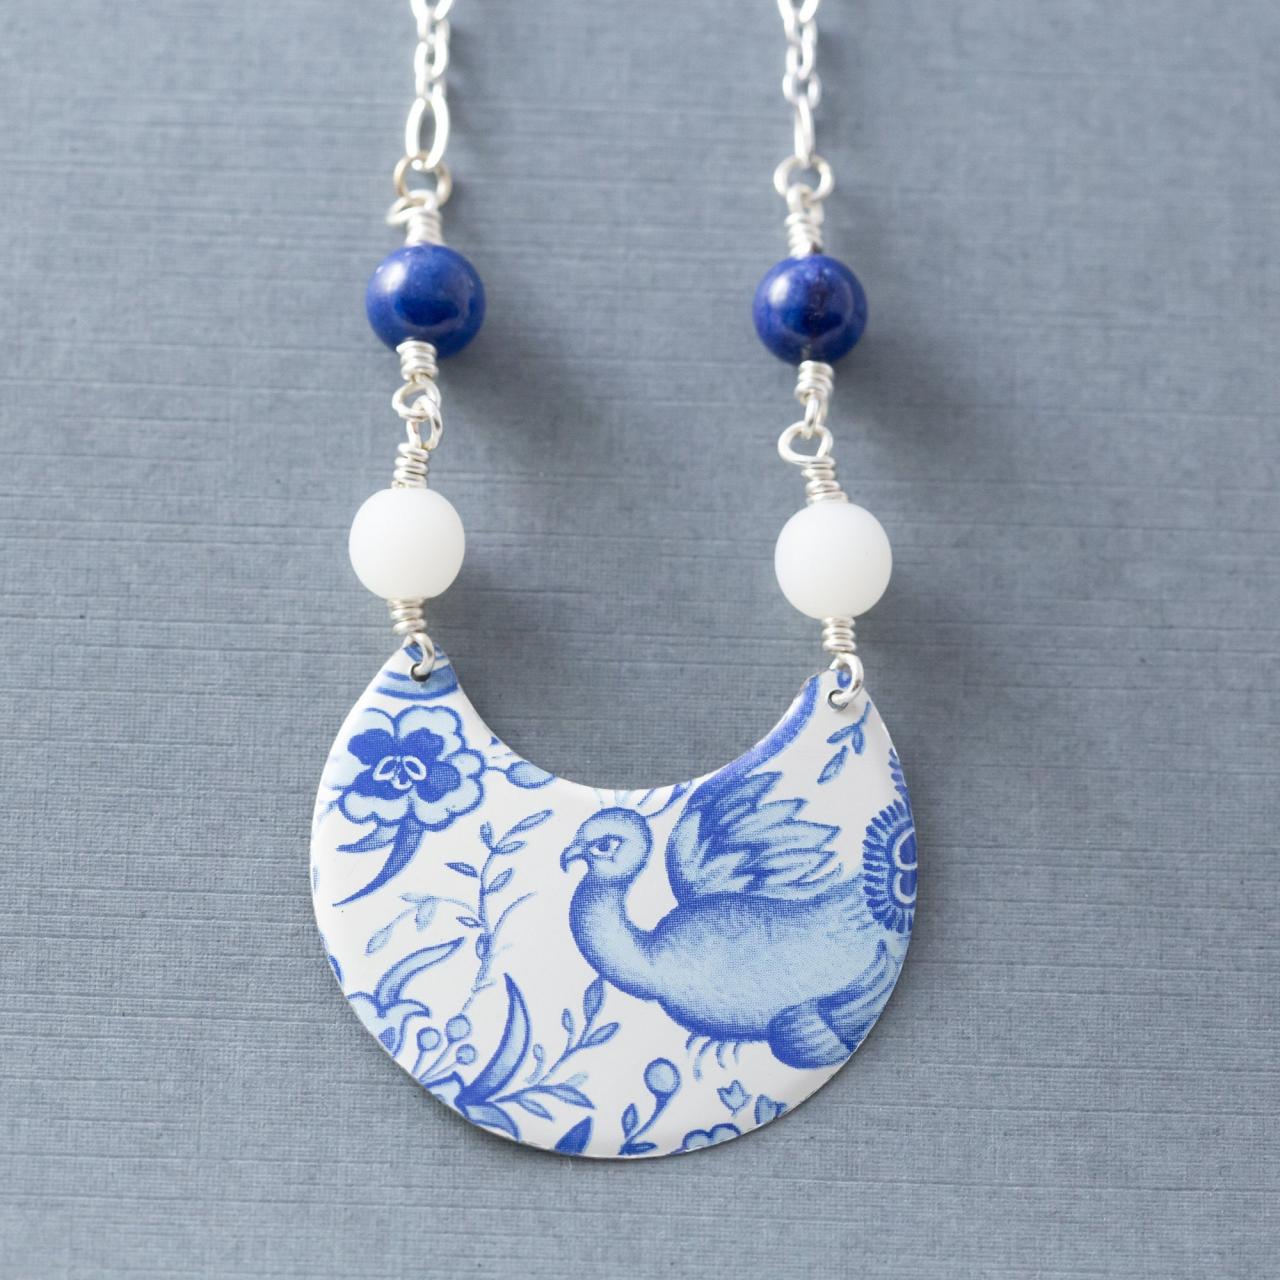 White & Blue Bird Necklace, Delft Necklace, Semicircle Necklace, Cobalt Blue Necklace, Blue Flower Necklace, Tin Jewelry, Delft Jewelry